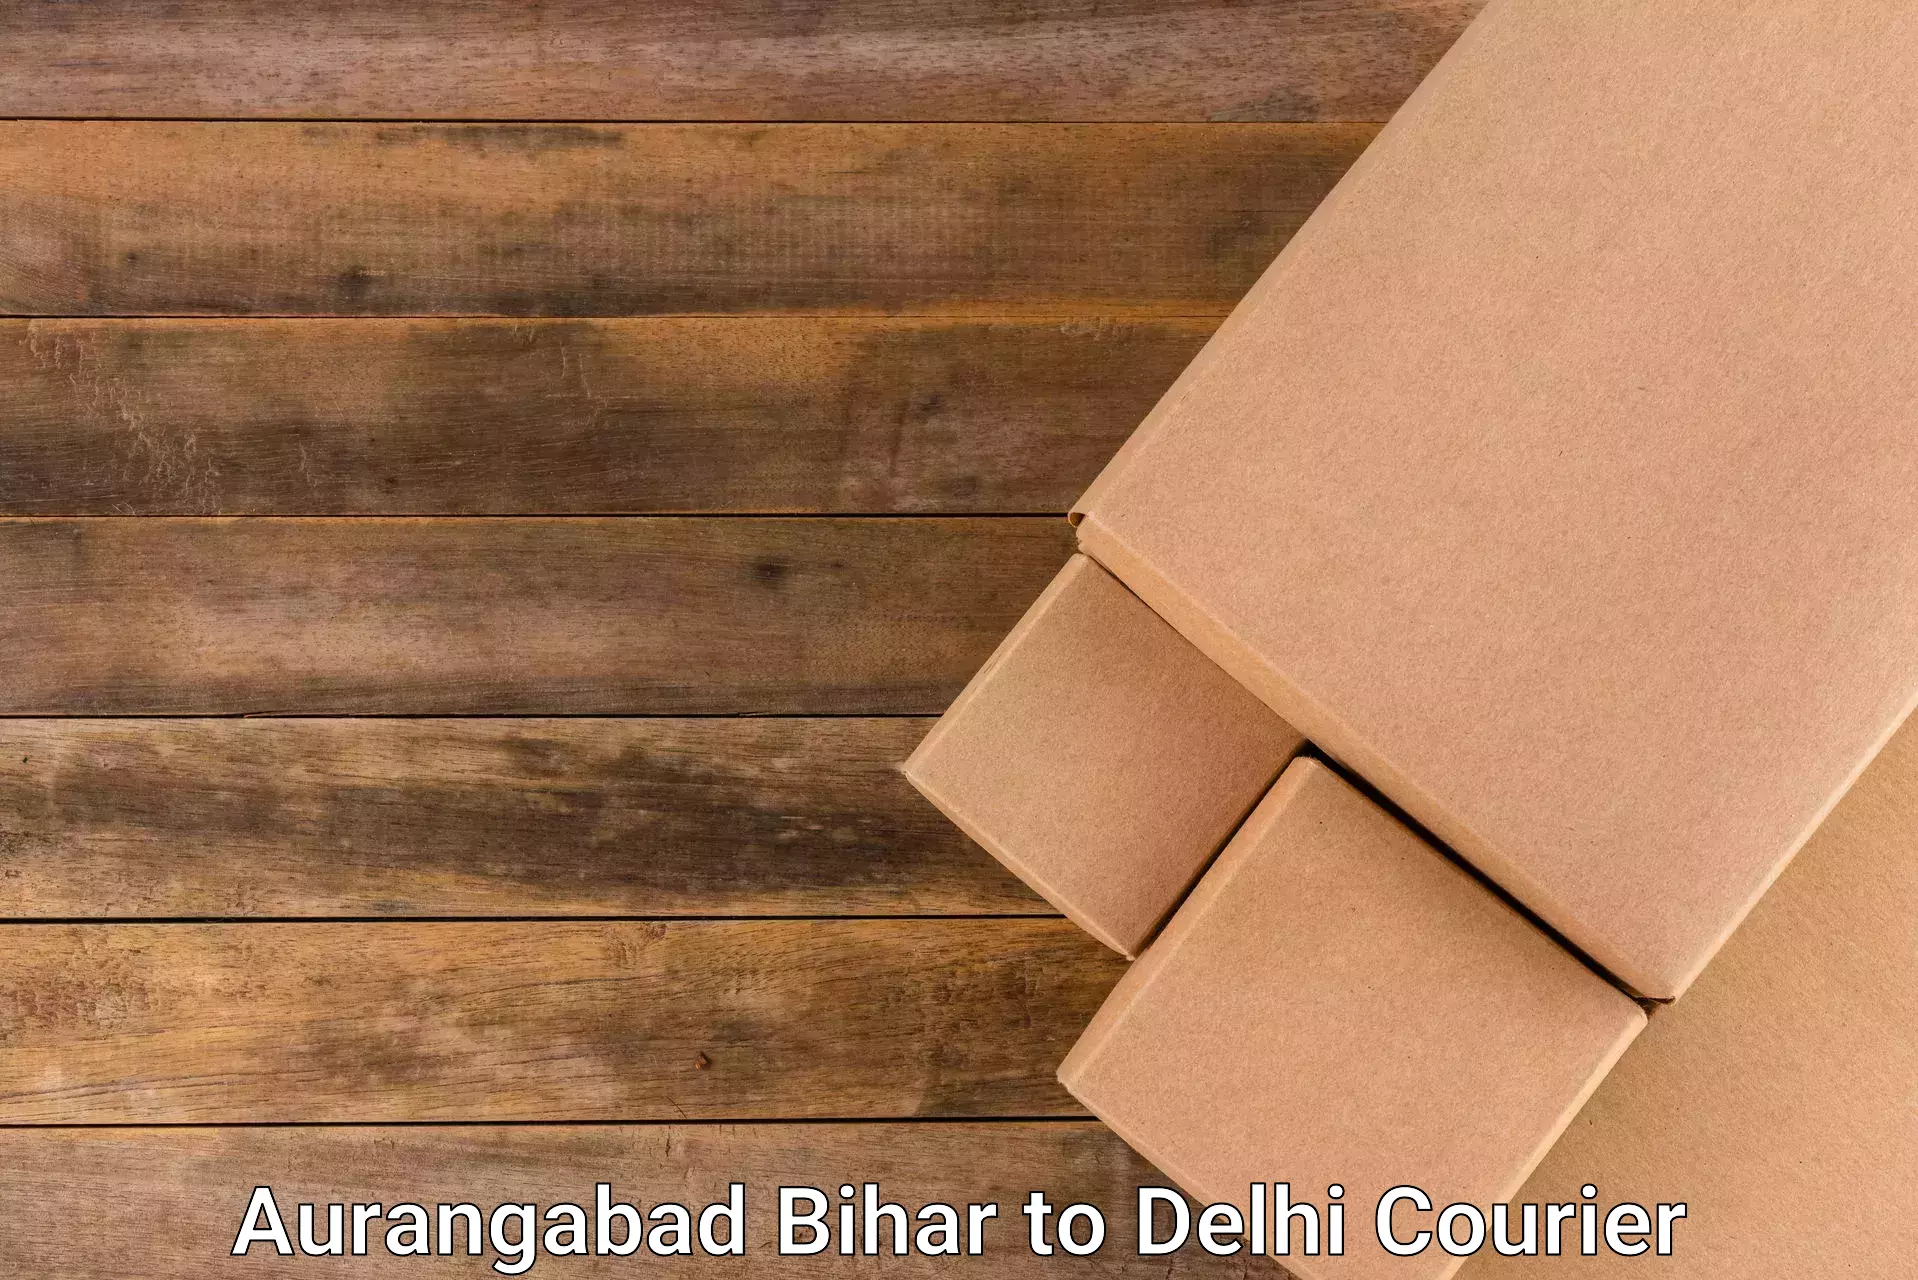 Specialized shipment handling in Aurangabad Bihar to Krishna Nagar